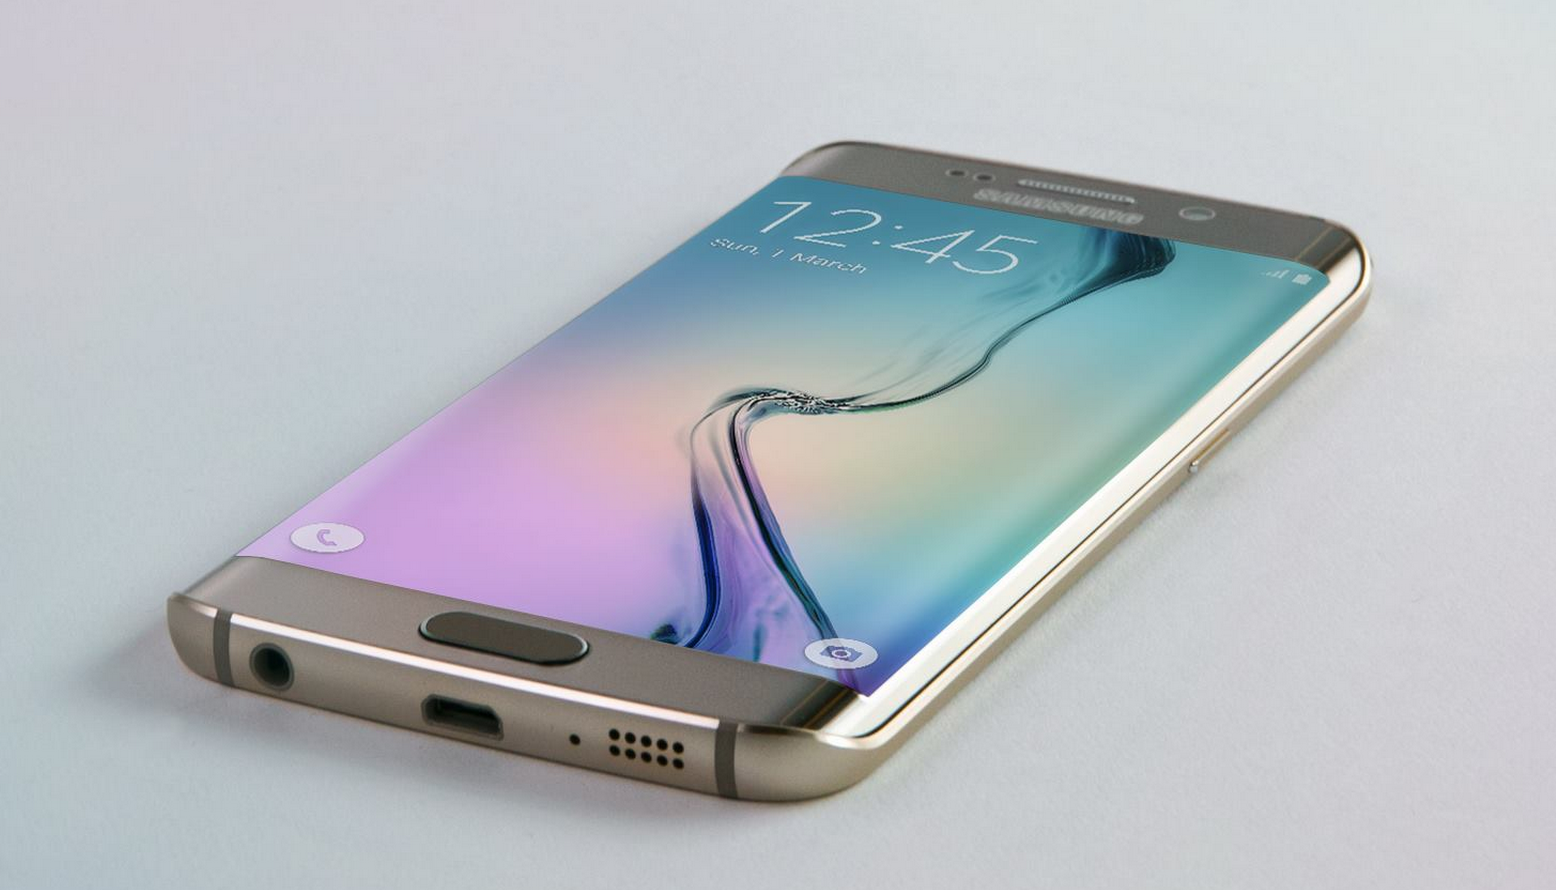 lyserød på klimaks 15 hurtige om de nye Samsung Galaxy S6 og Galaxy S6 Edge - ELEKTRONISTA